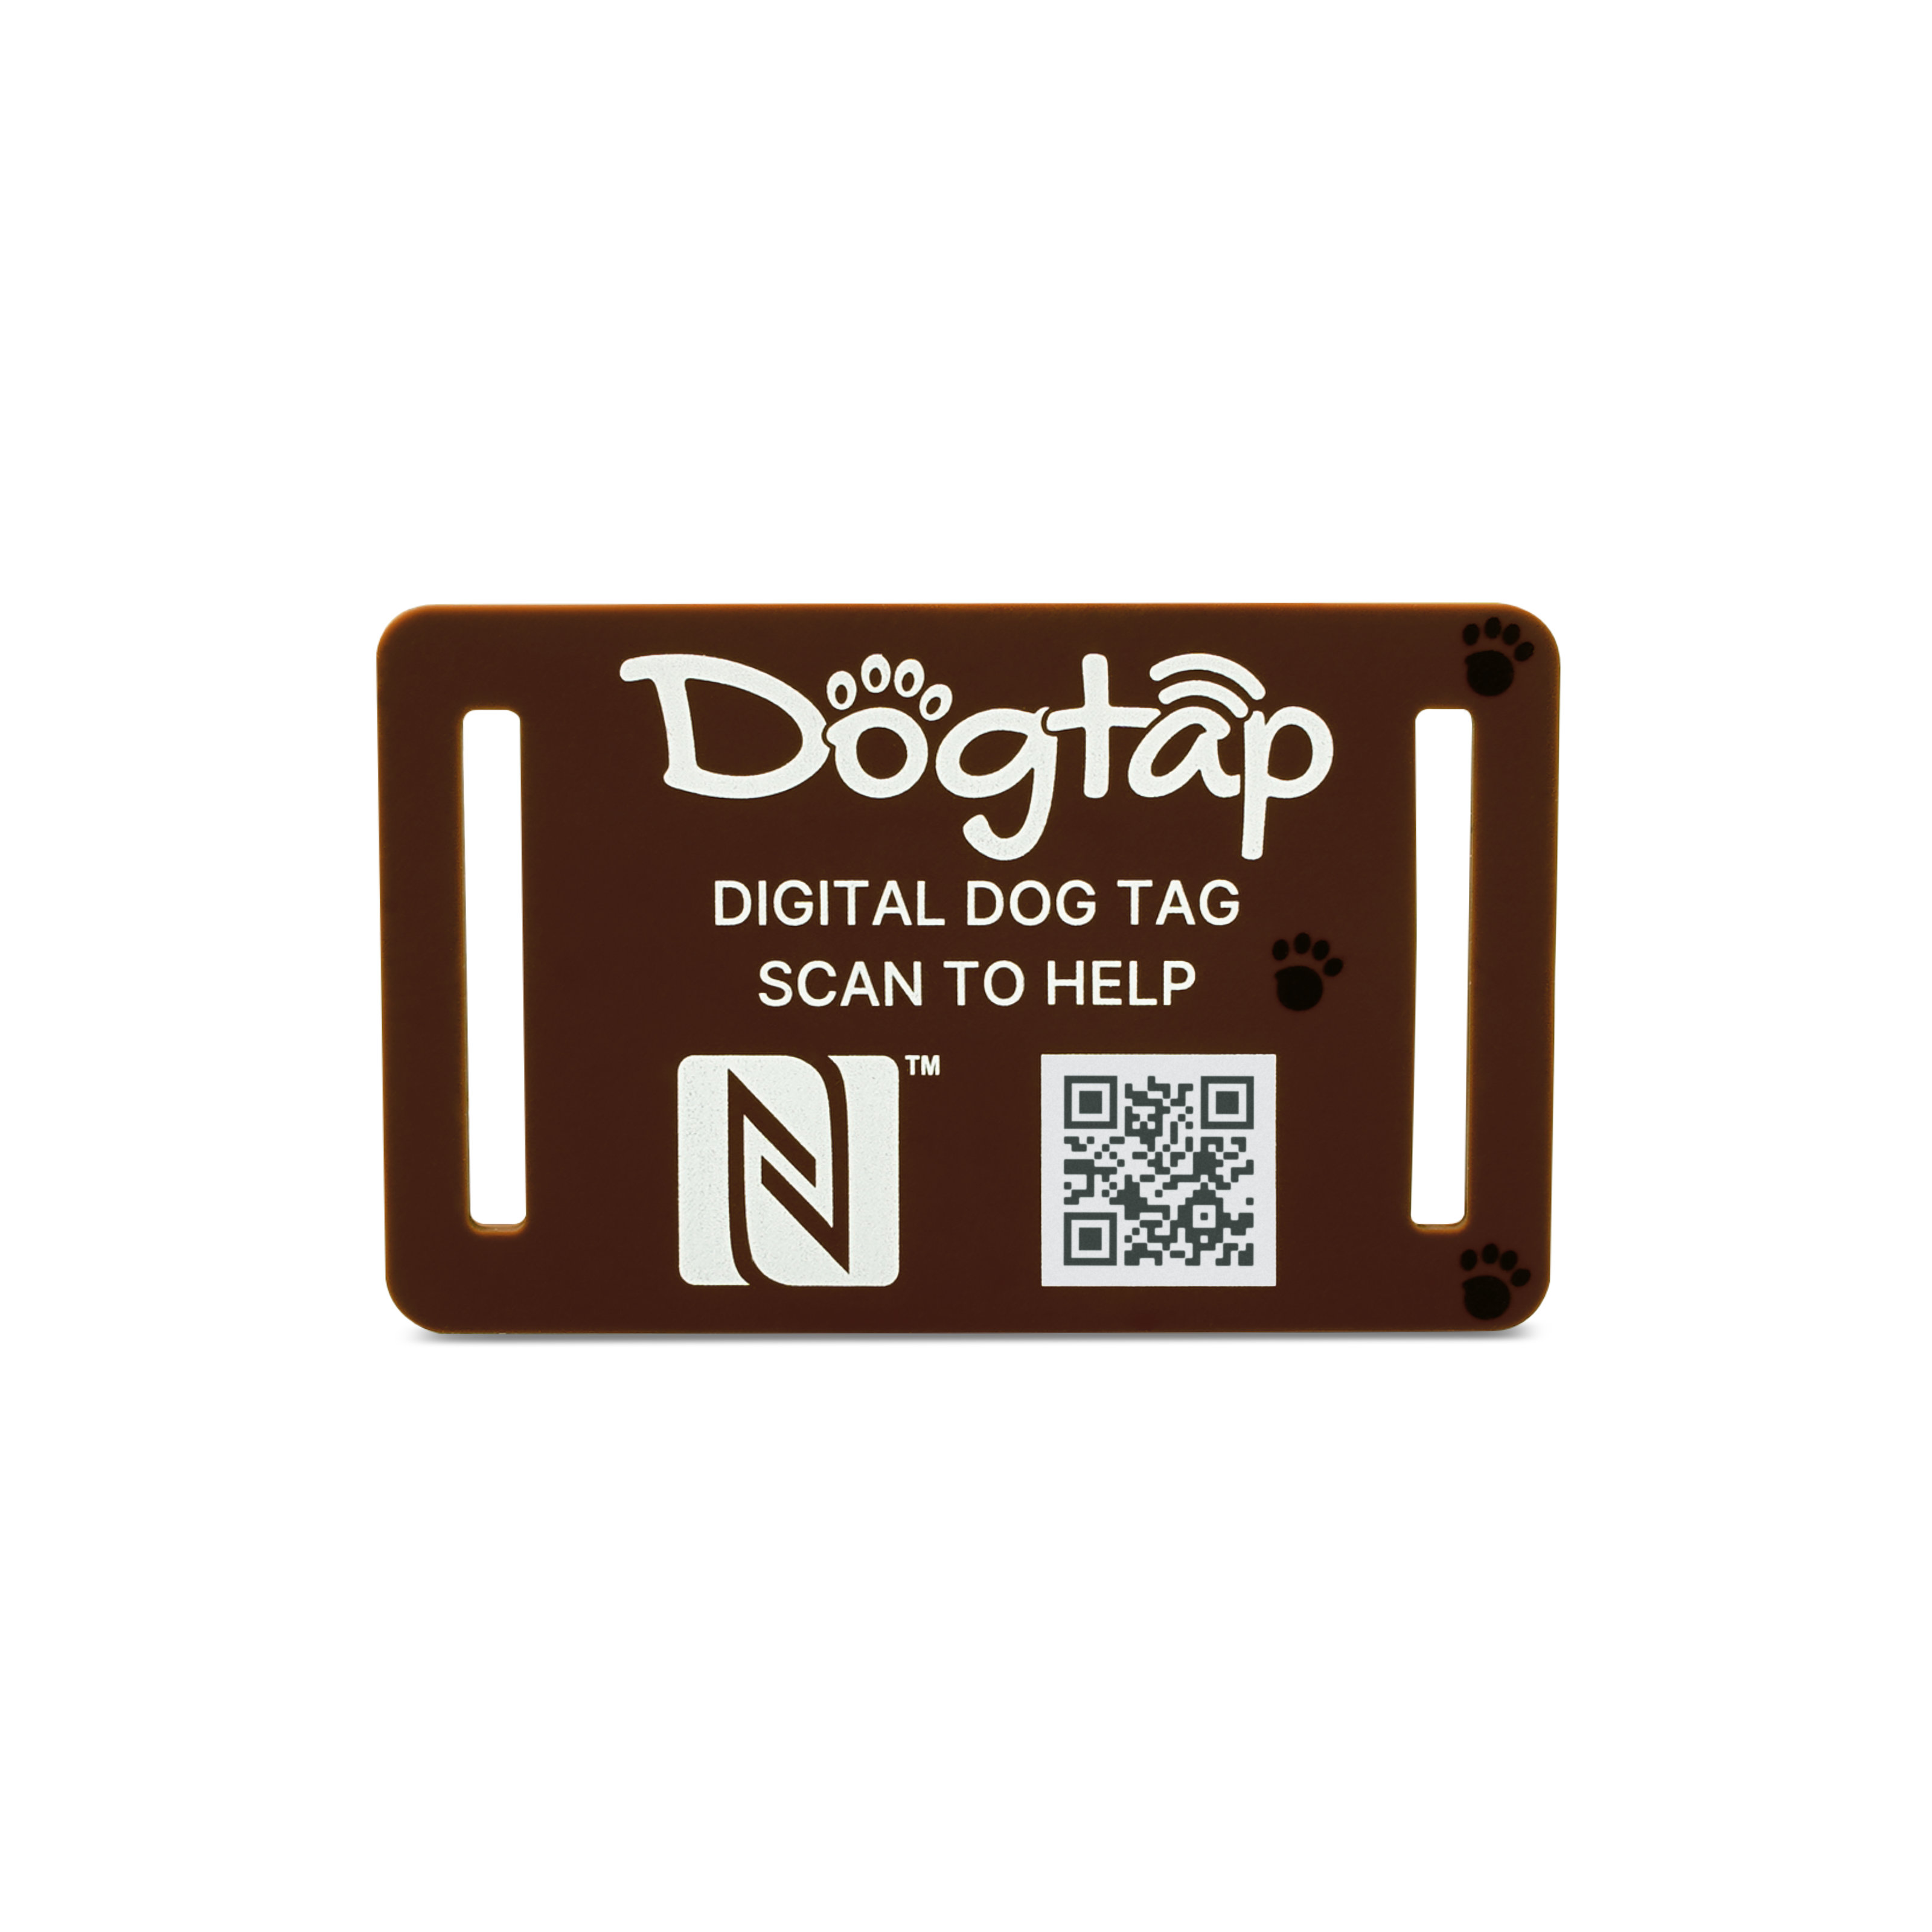 Dogtap Light Big - Digitale Hundemarke - Silikon - 67 x 40 mm - braun